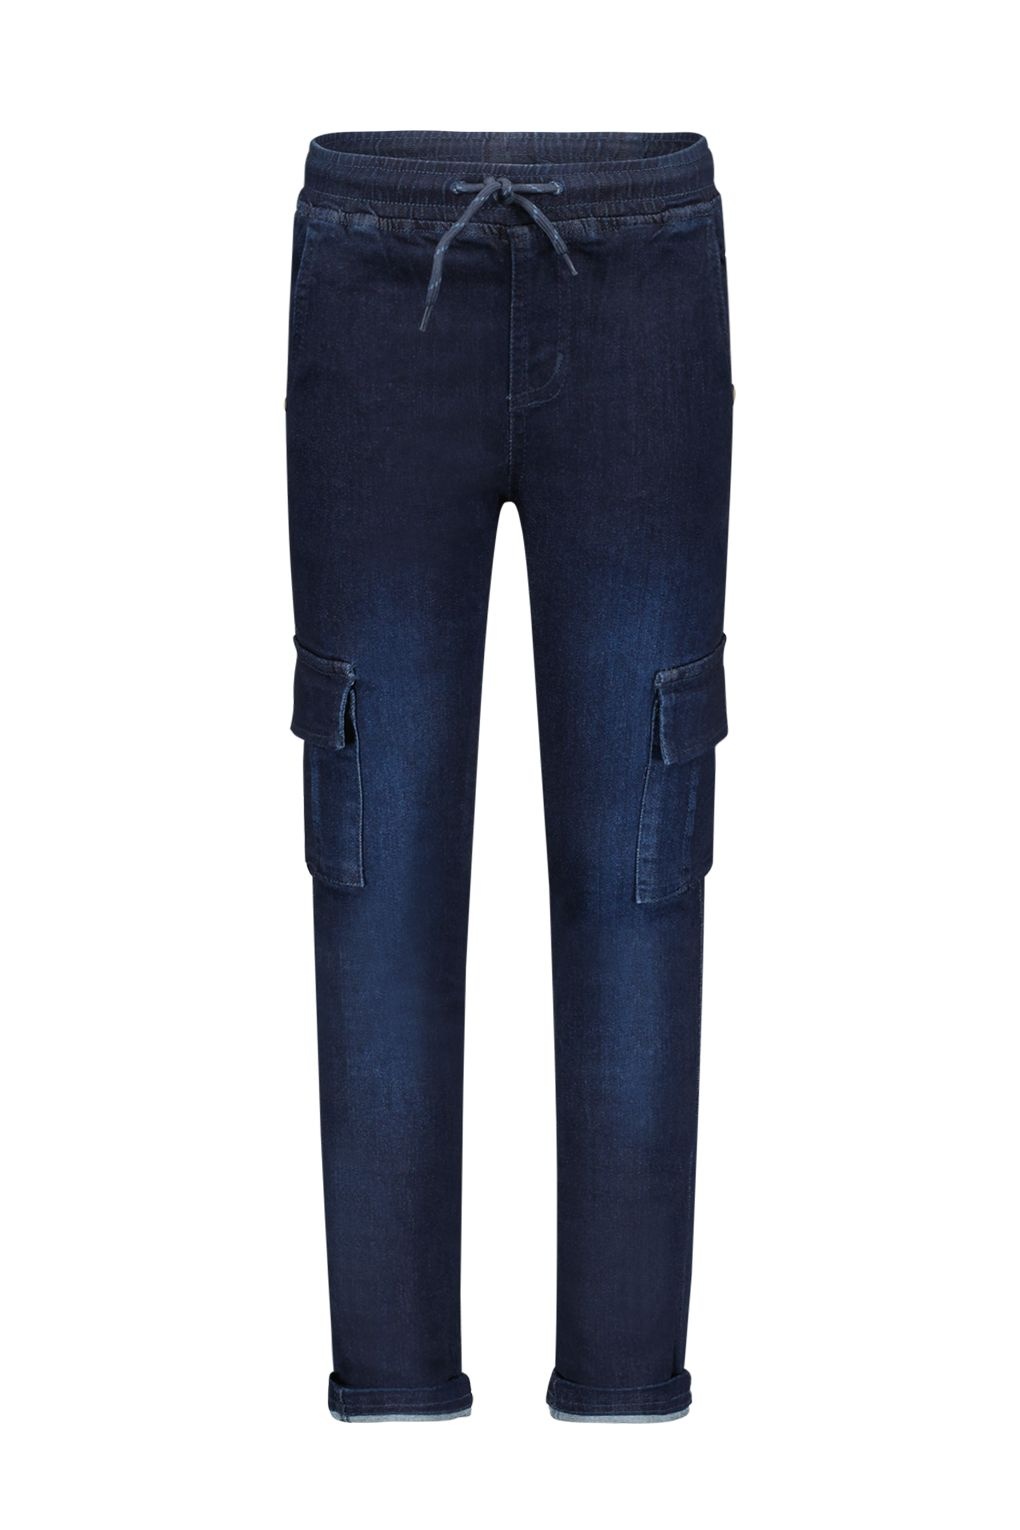 B.Nosy Jongens jeans broek - Boy - Grace denim